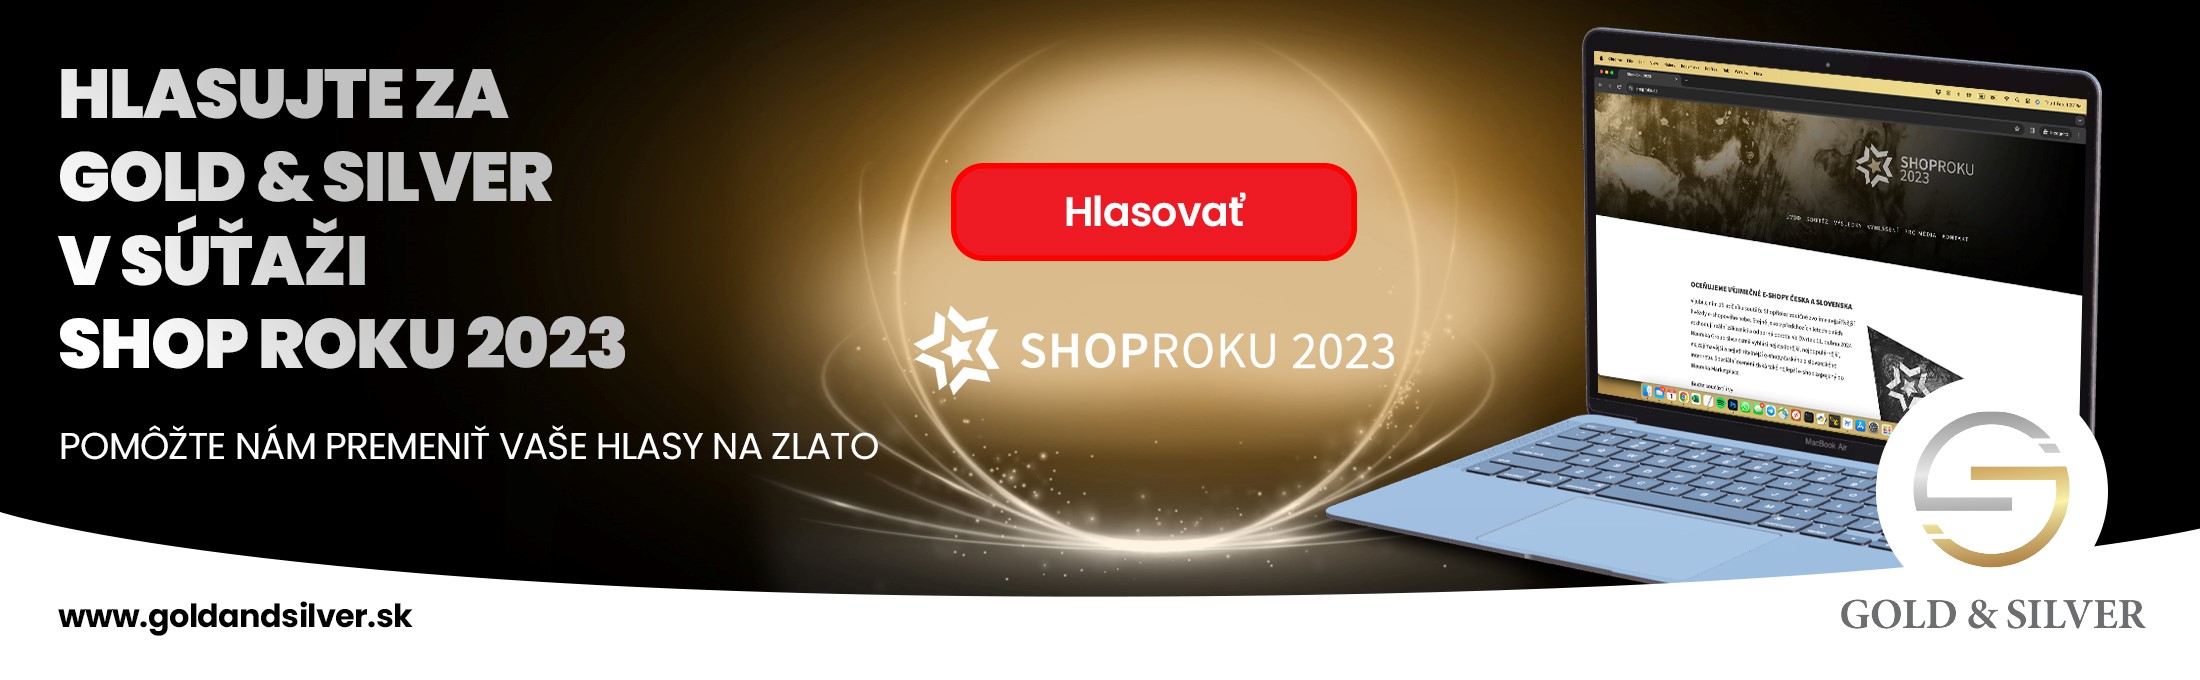 Shop roku 2023